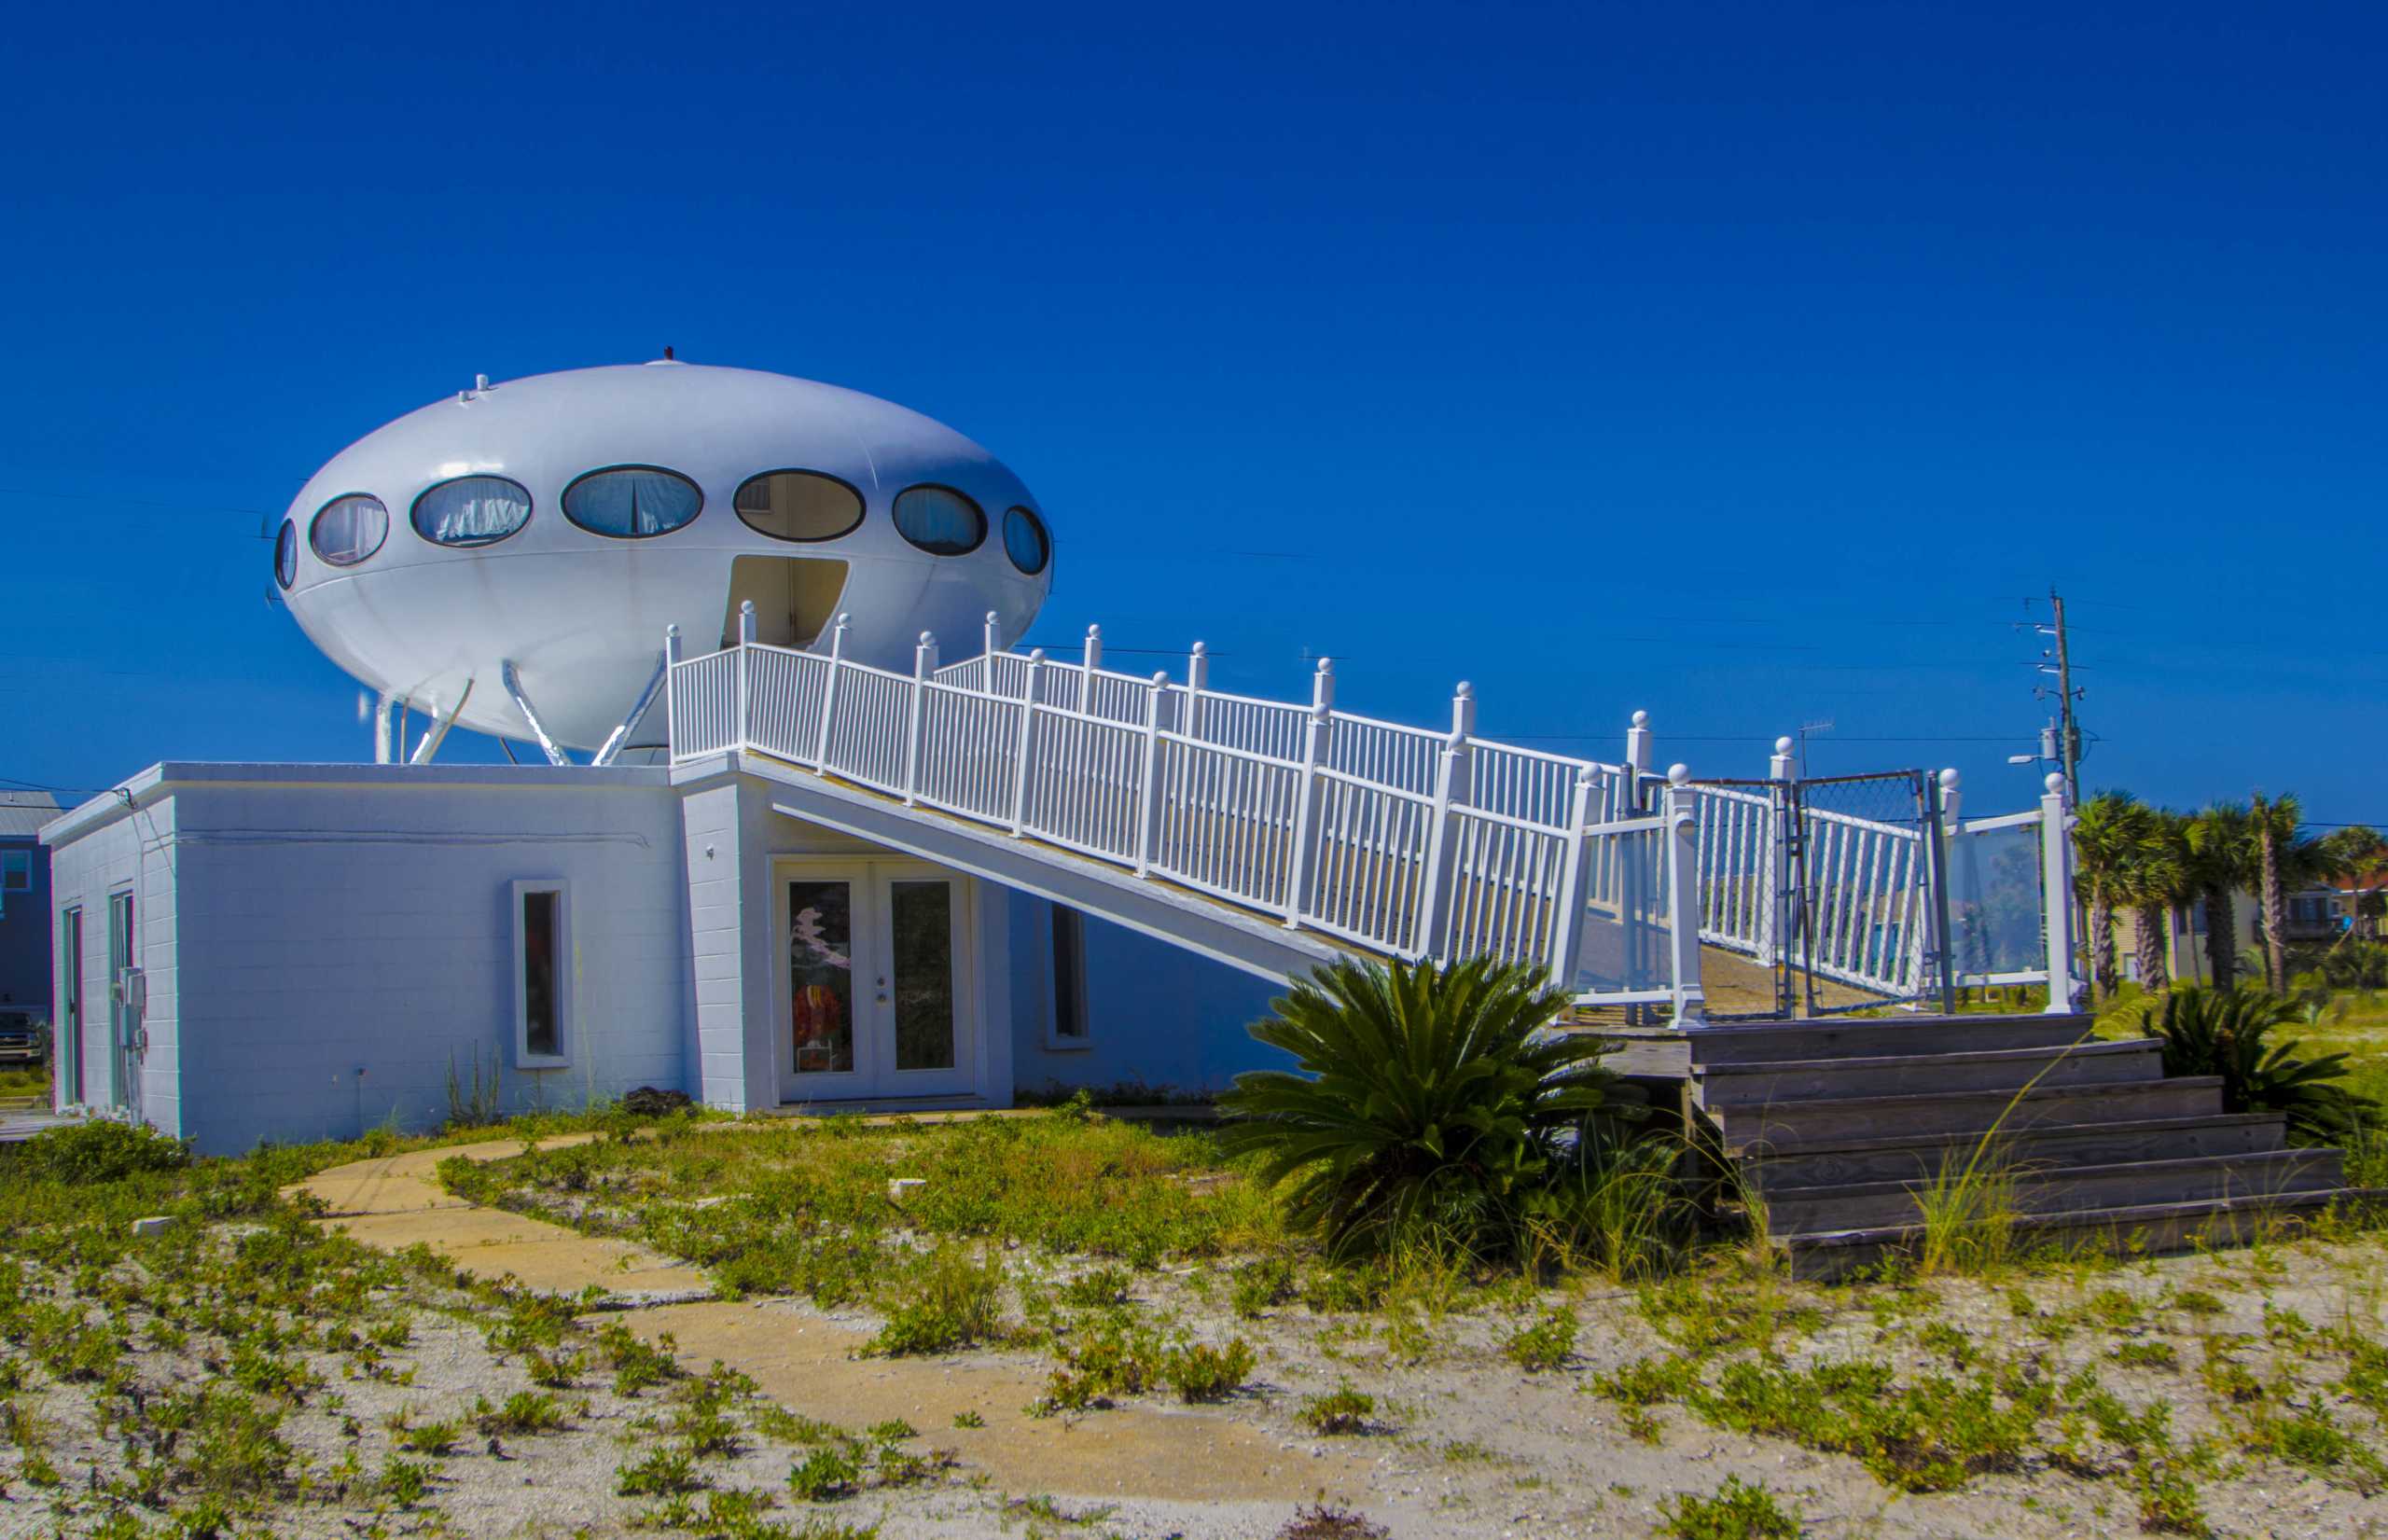 Famous UFO House